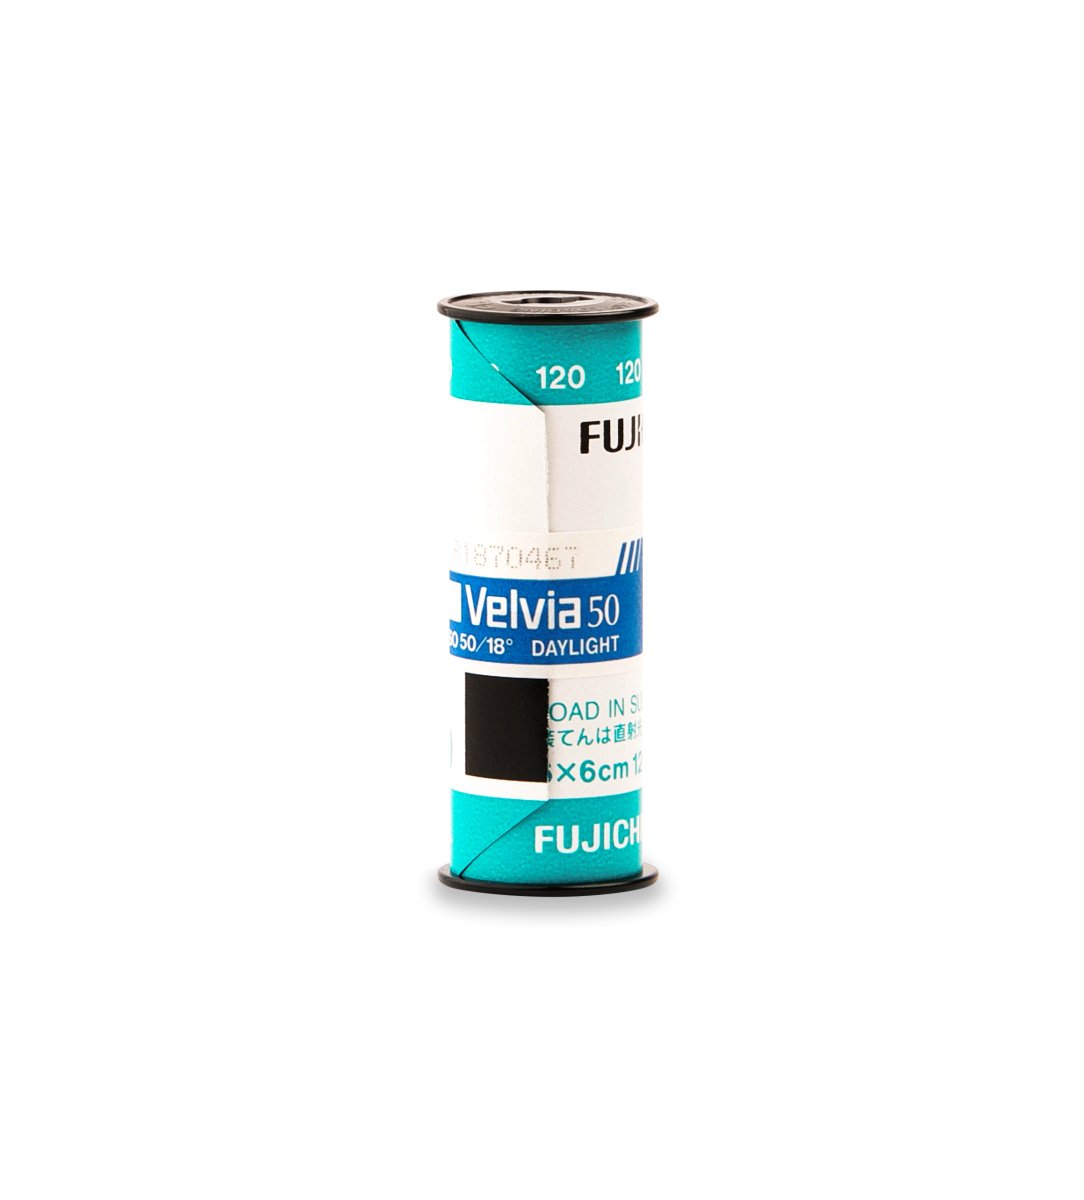 Fujifilm Velvia 50 -120 - Single Roll